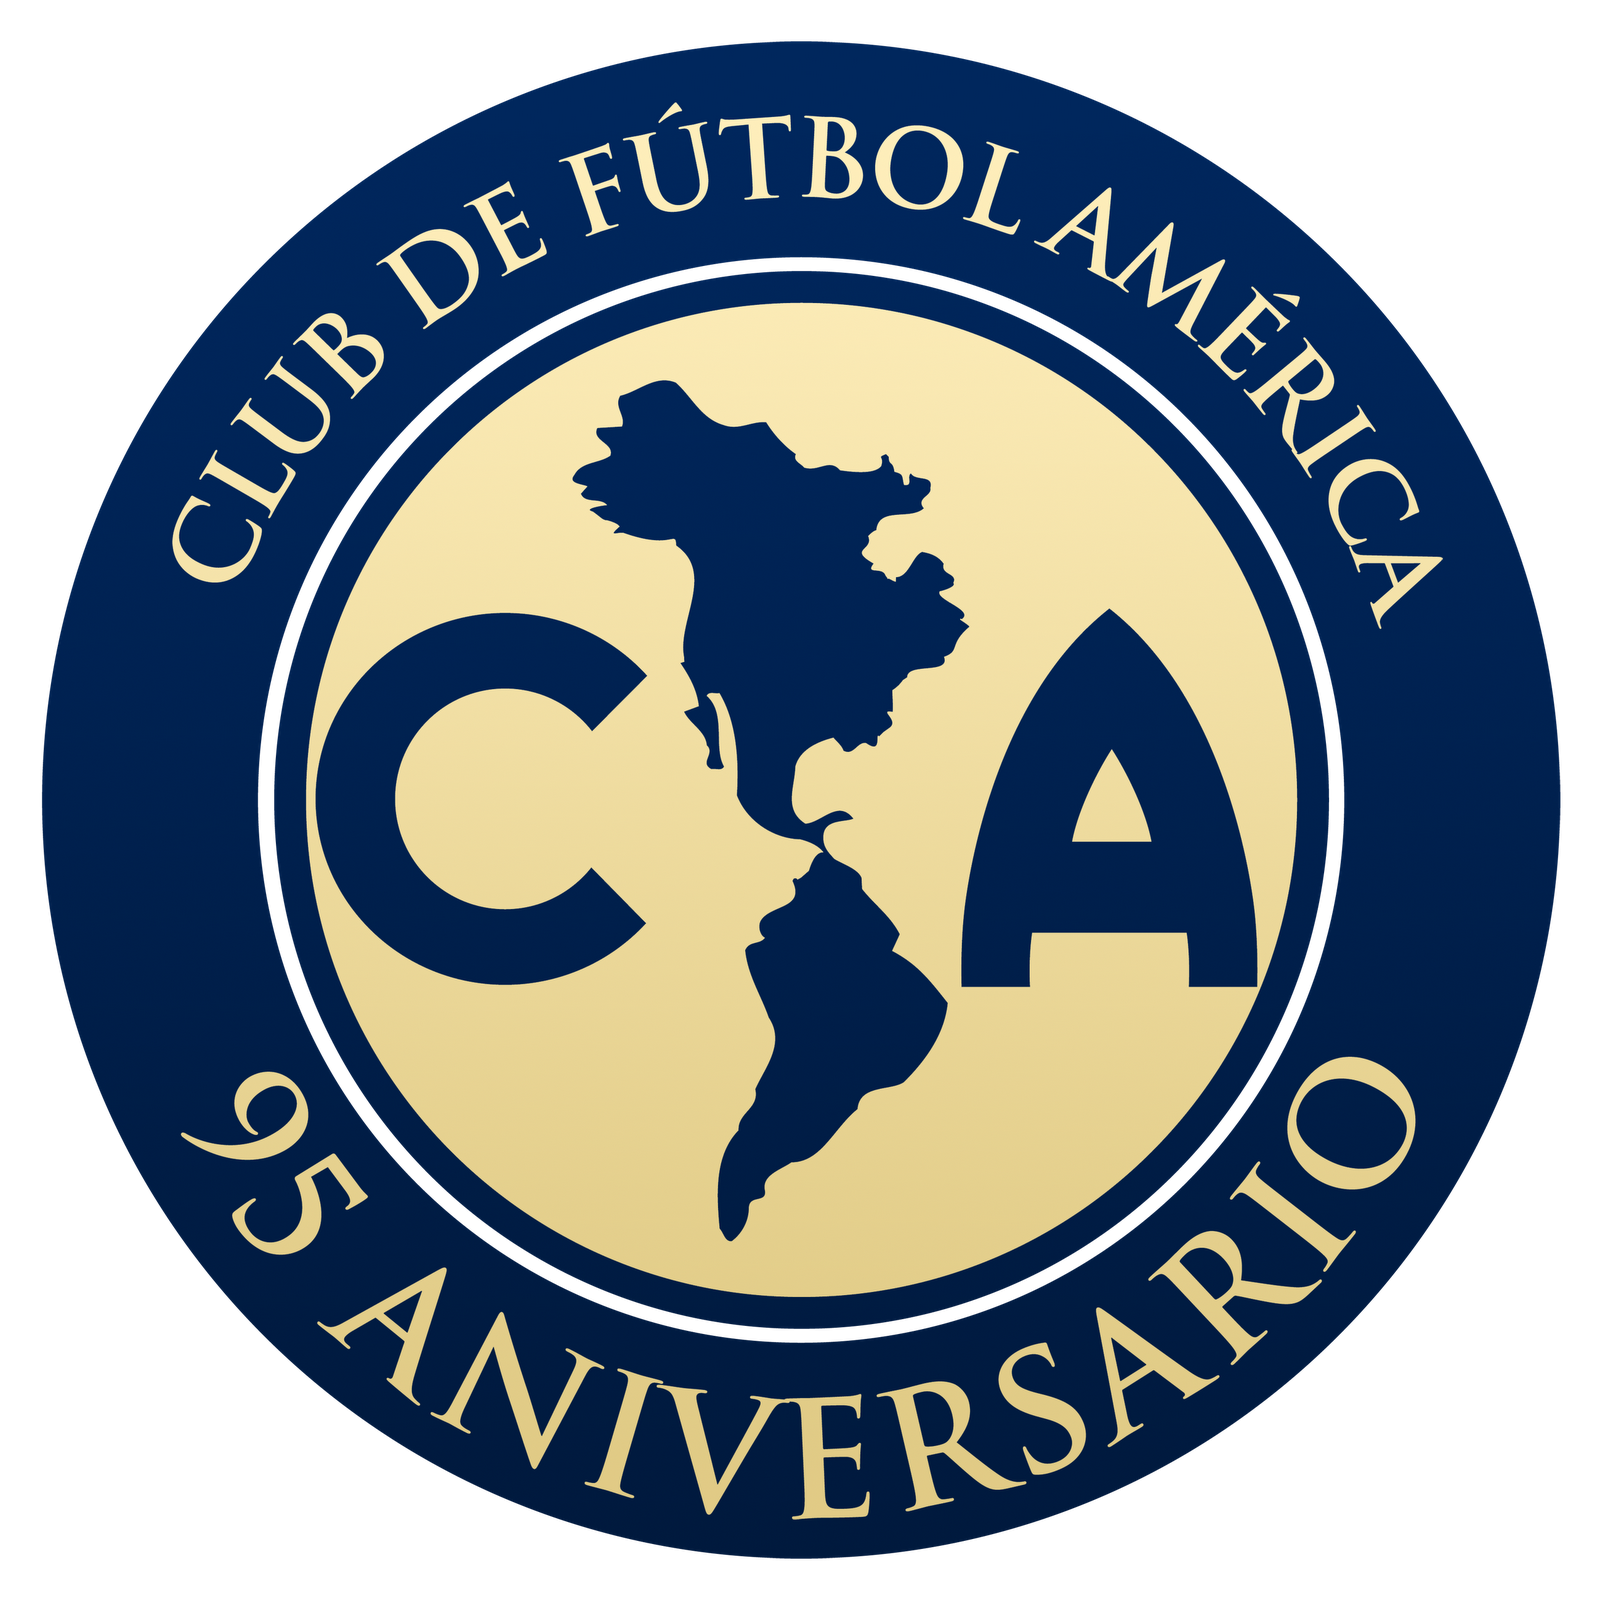 Free Logo Club America, Download Free Logo Club America png images